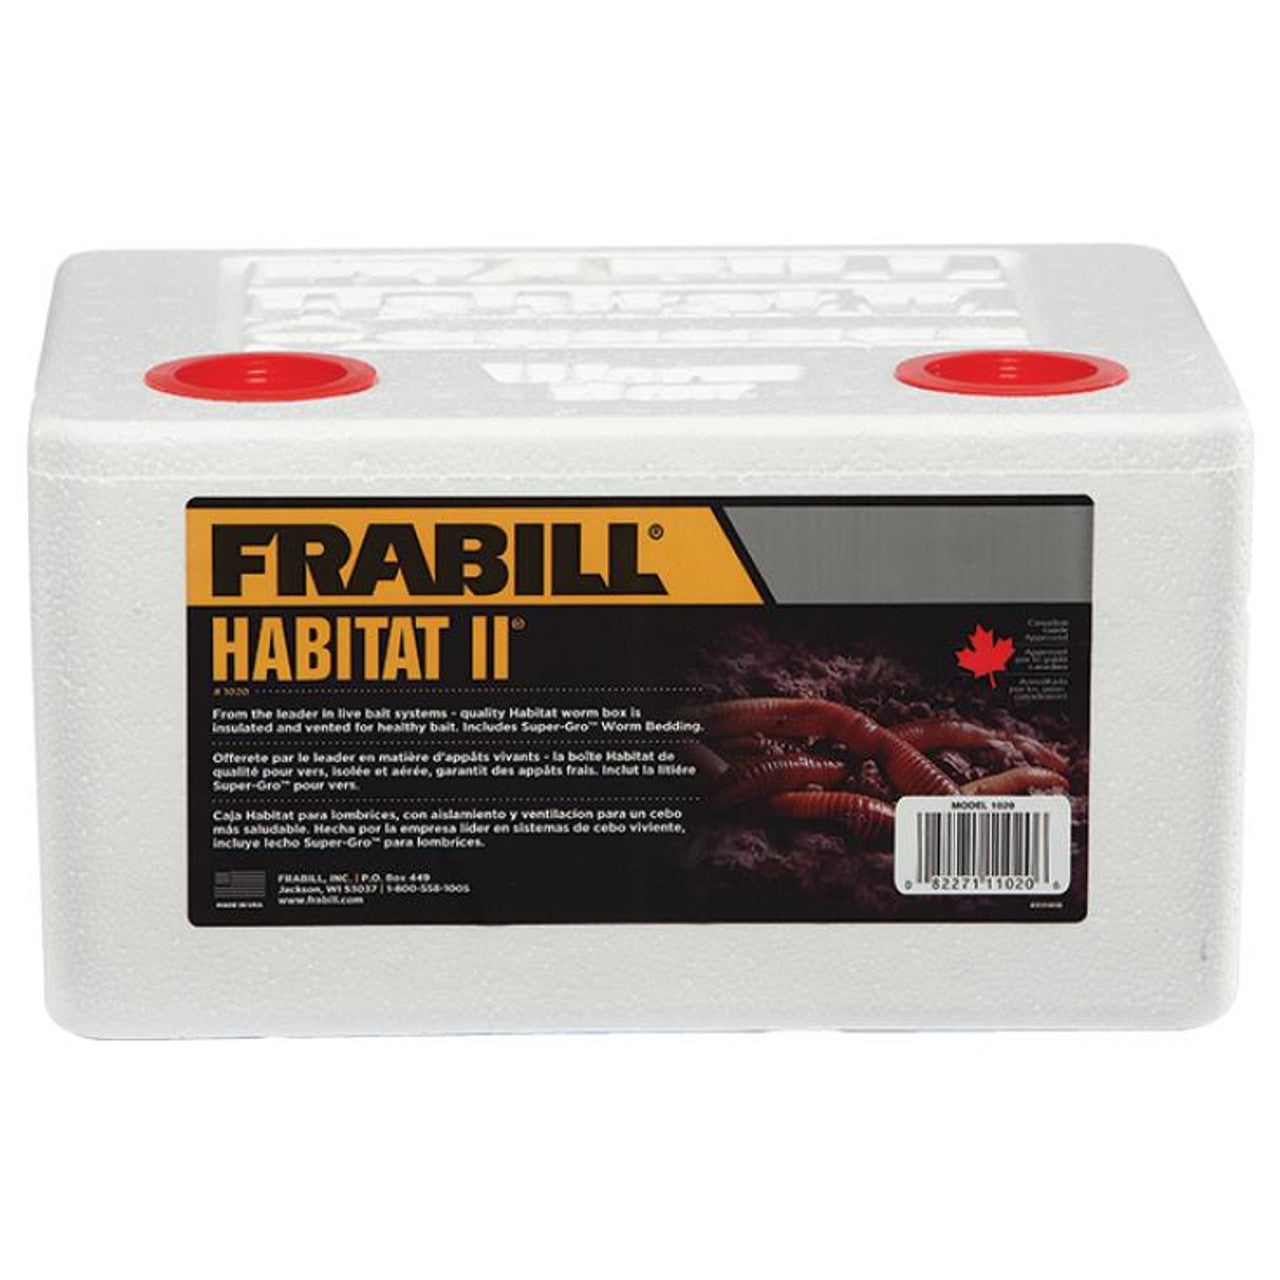 Frabill Habitat II Worm Box with Super-Gro Bedding